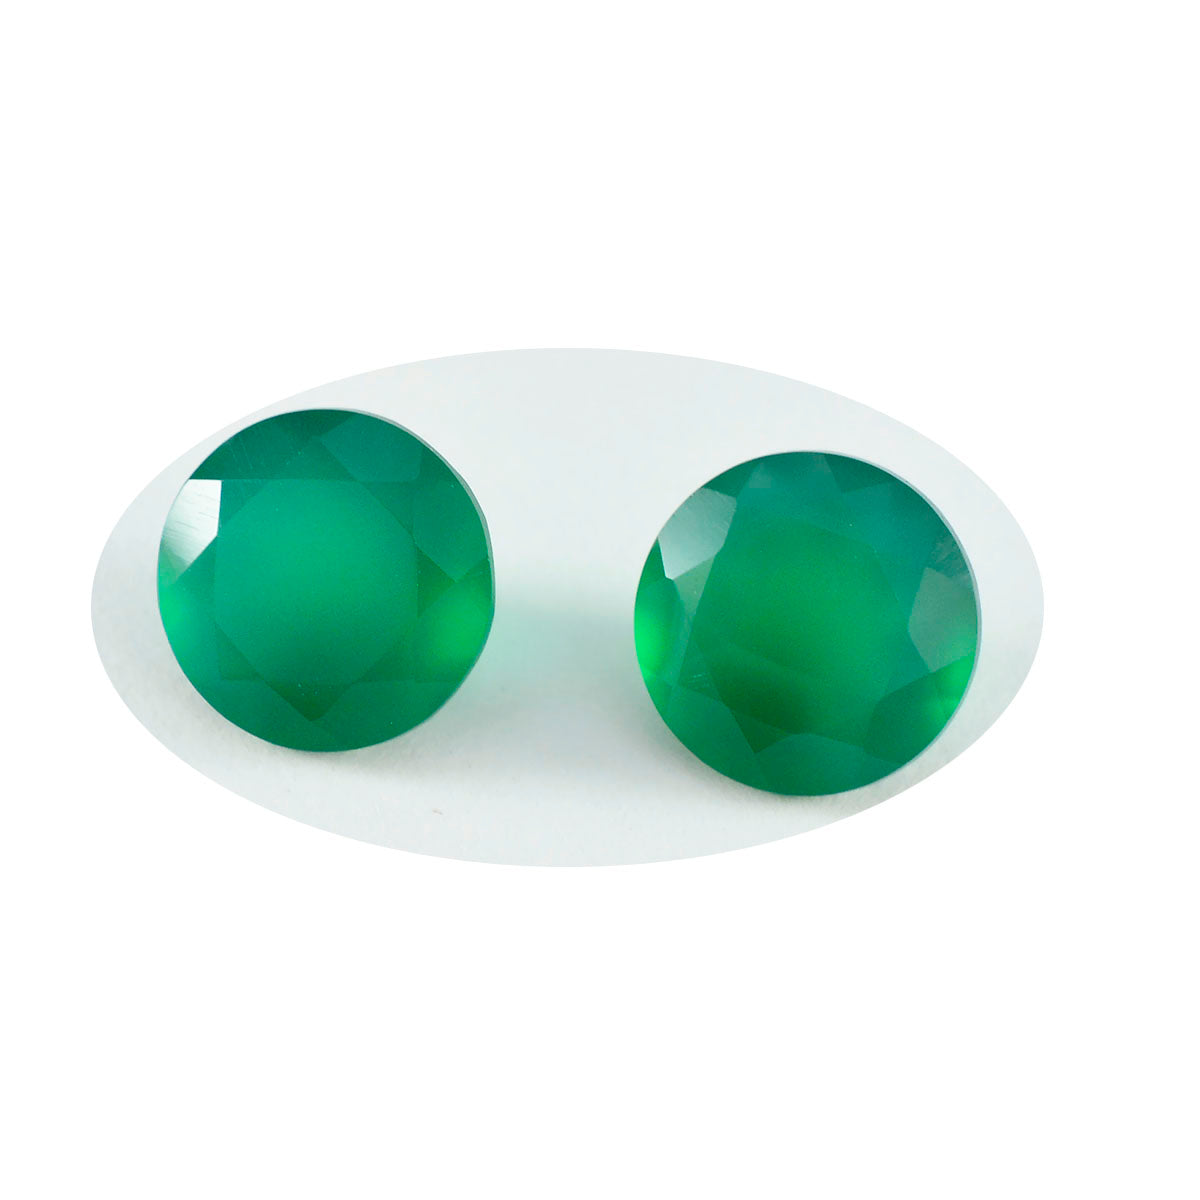 riyogems 1 st äkta grön onyx fasetterad 7x7 mm rund form fin kvalitetssten